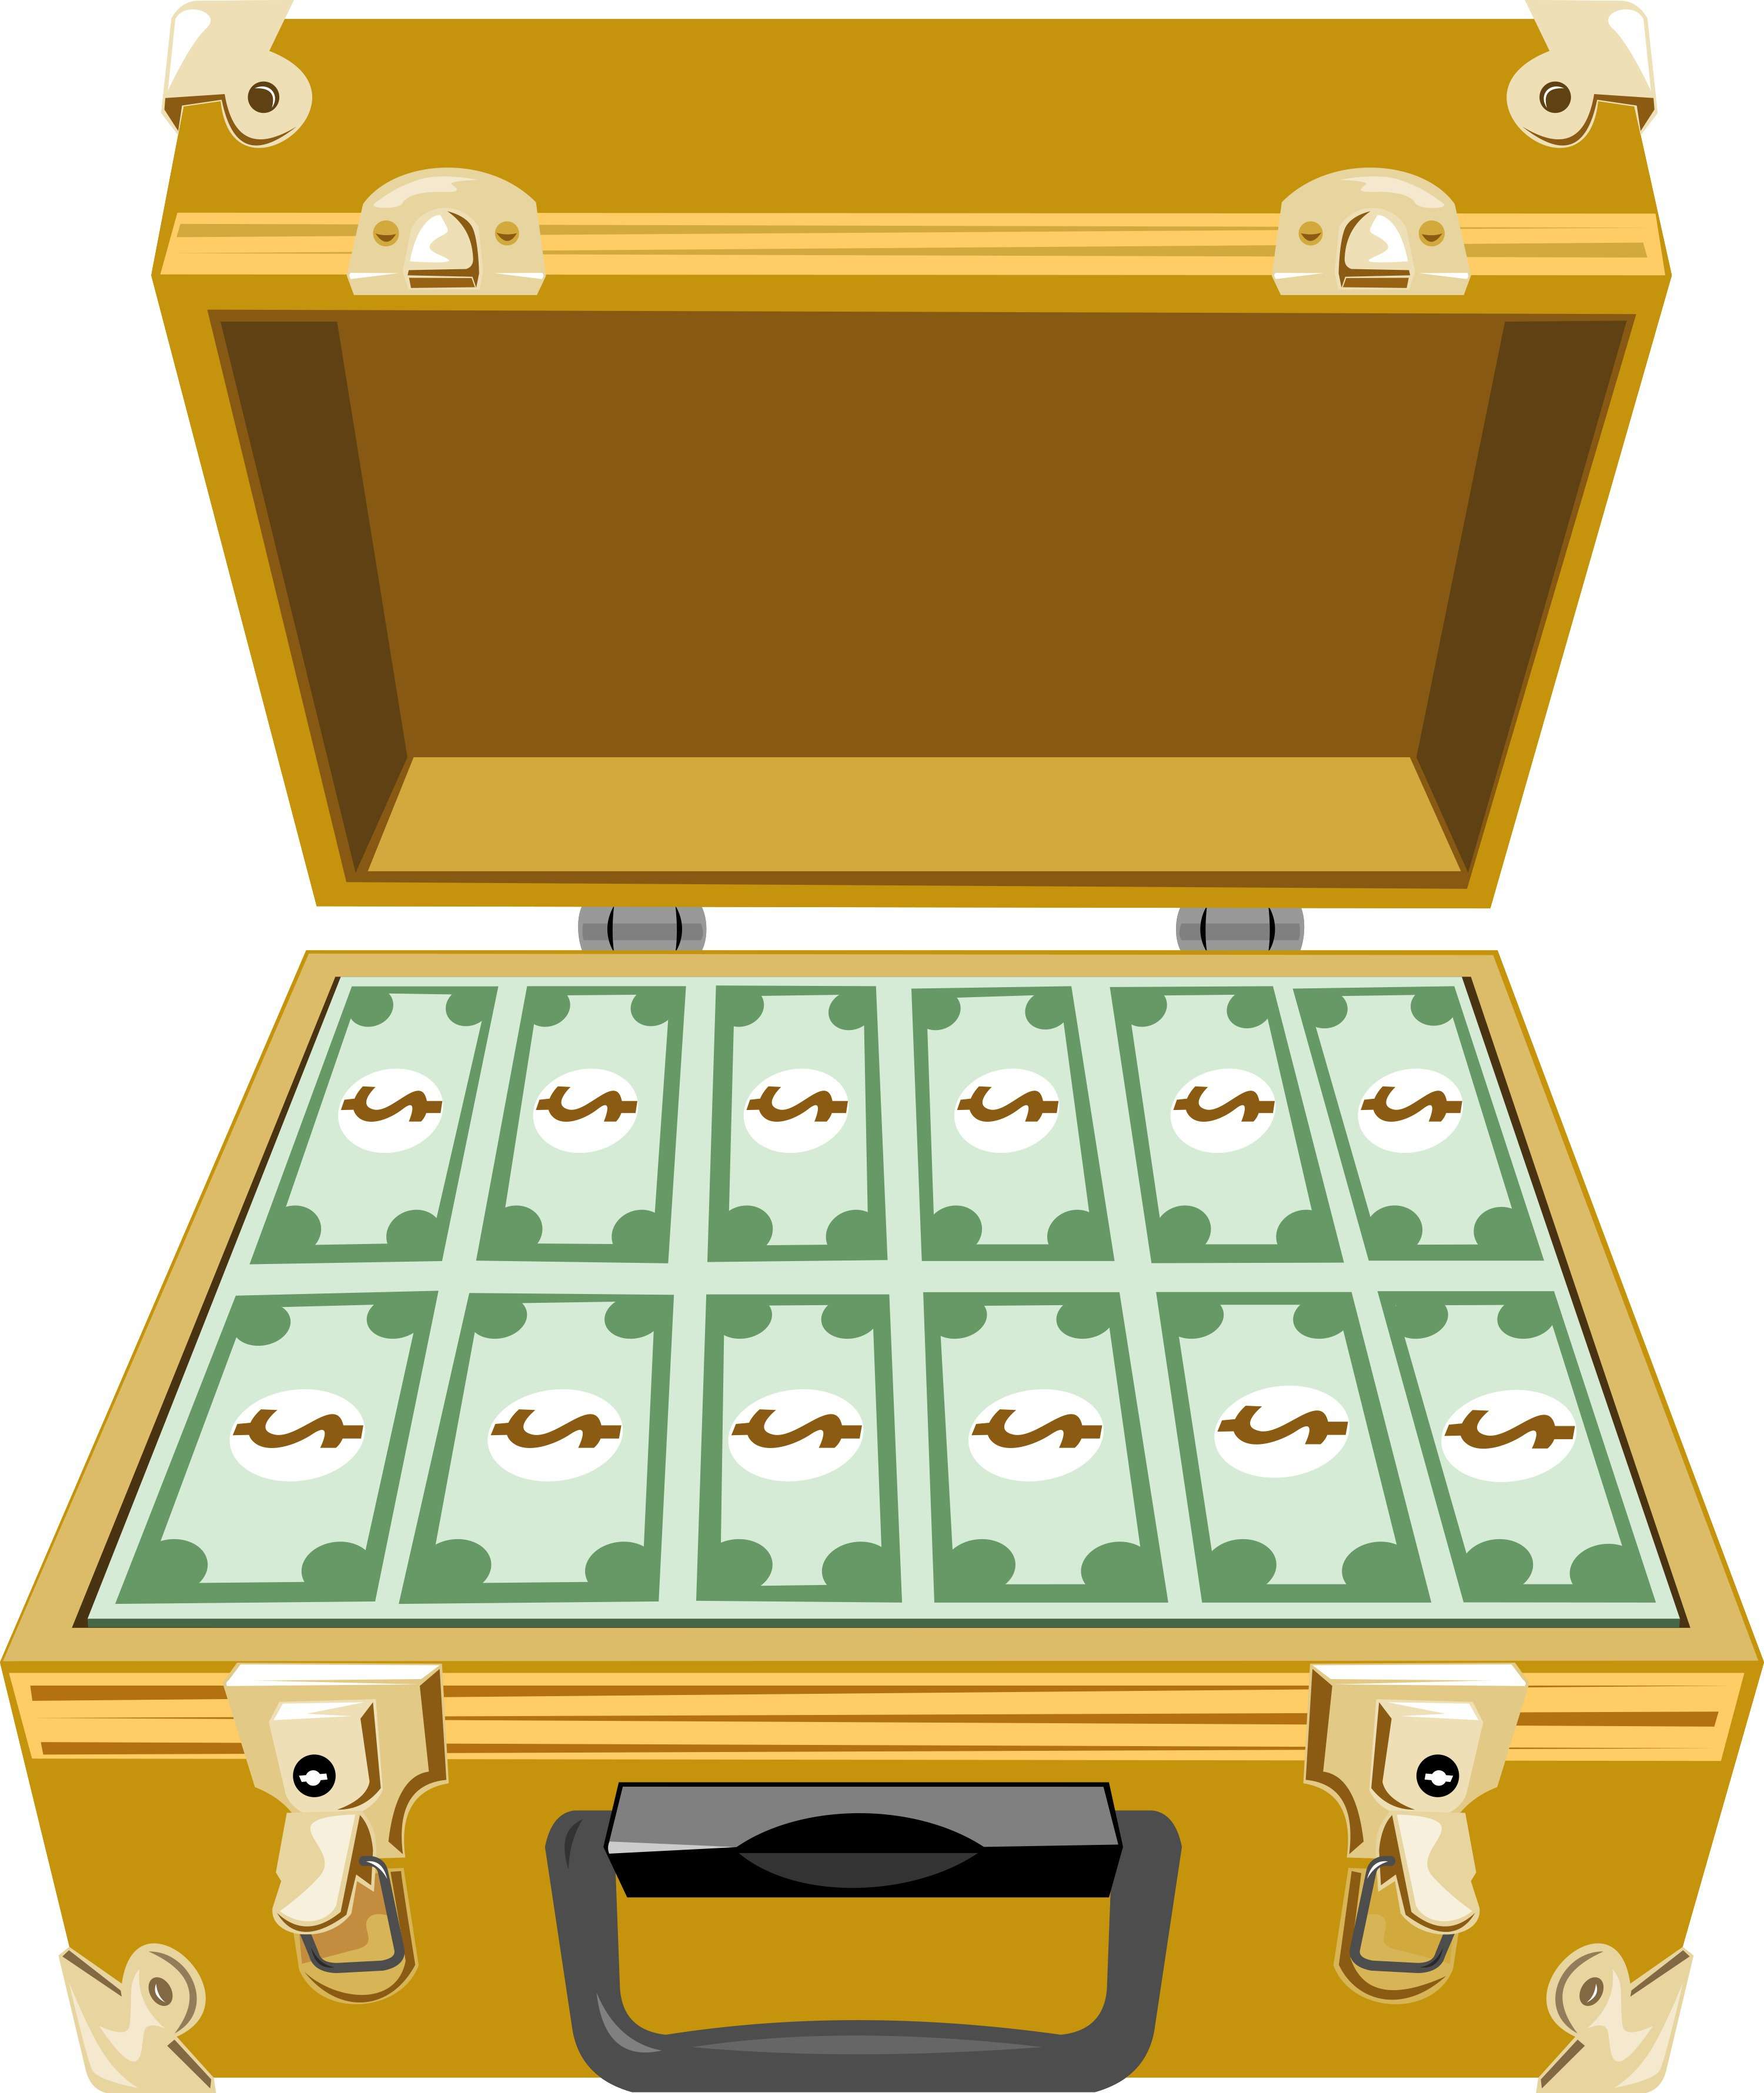 money-in-briefcase_G157VwUu_L (photo credit: graphicstock)